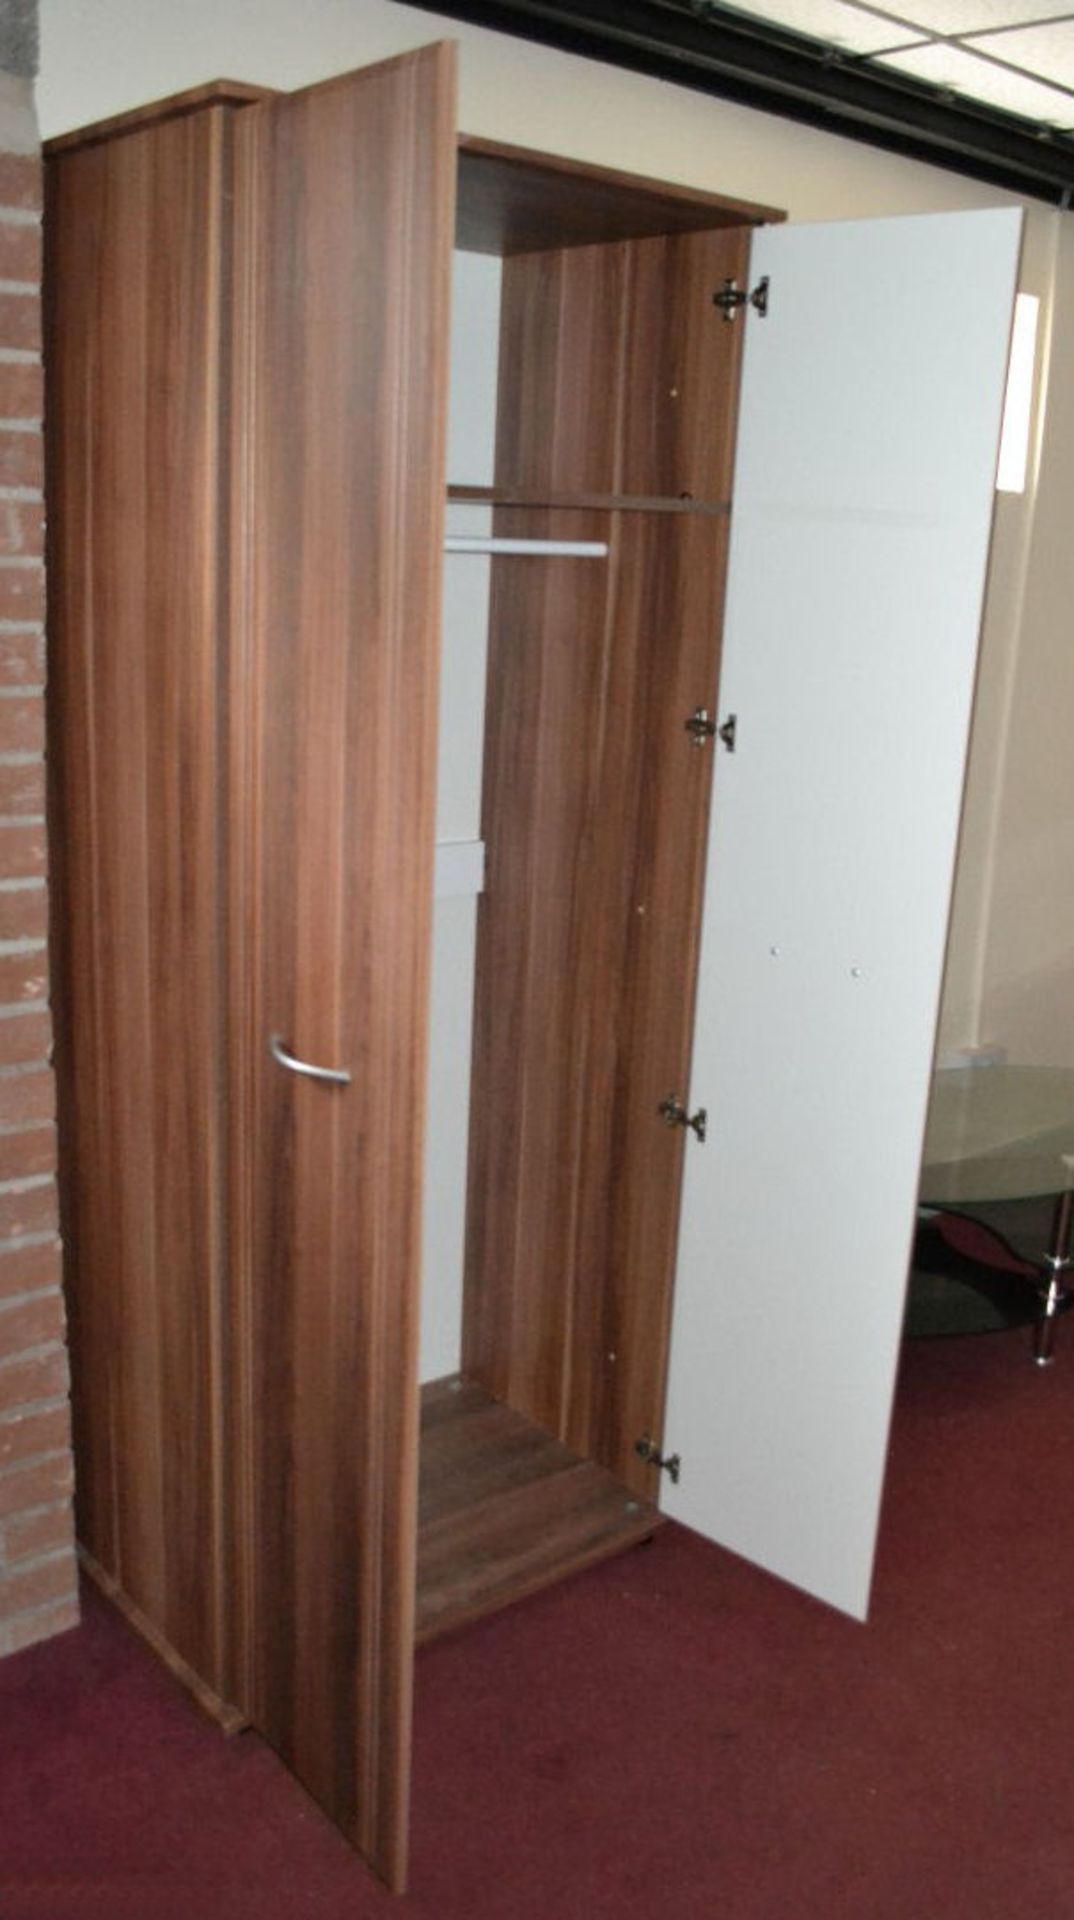 1 x Large 2 Door Wardrobe with Silver Handles - Image 5 of 5